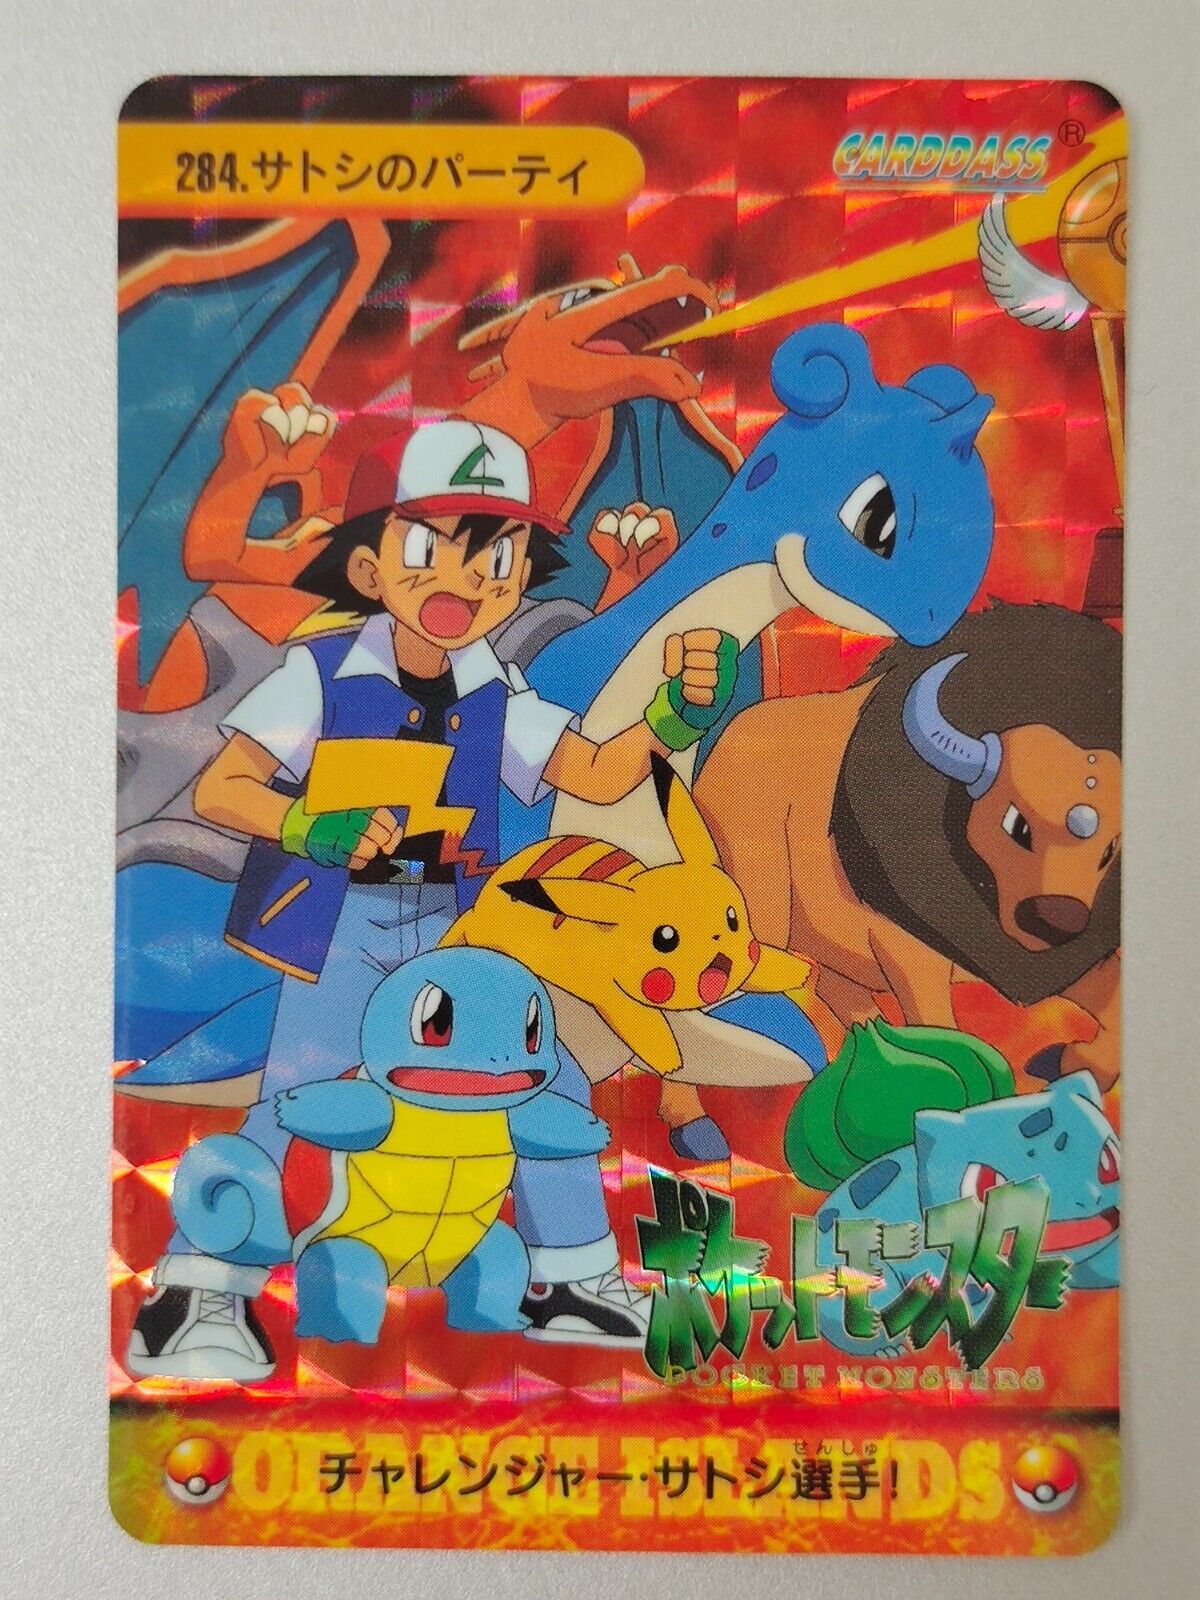 Bandai Pokemon Japanese Carddass Card Prism Holo Pikachu Charizard Lapras 284